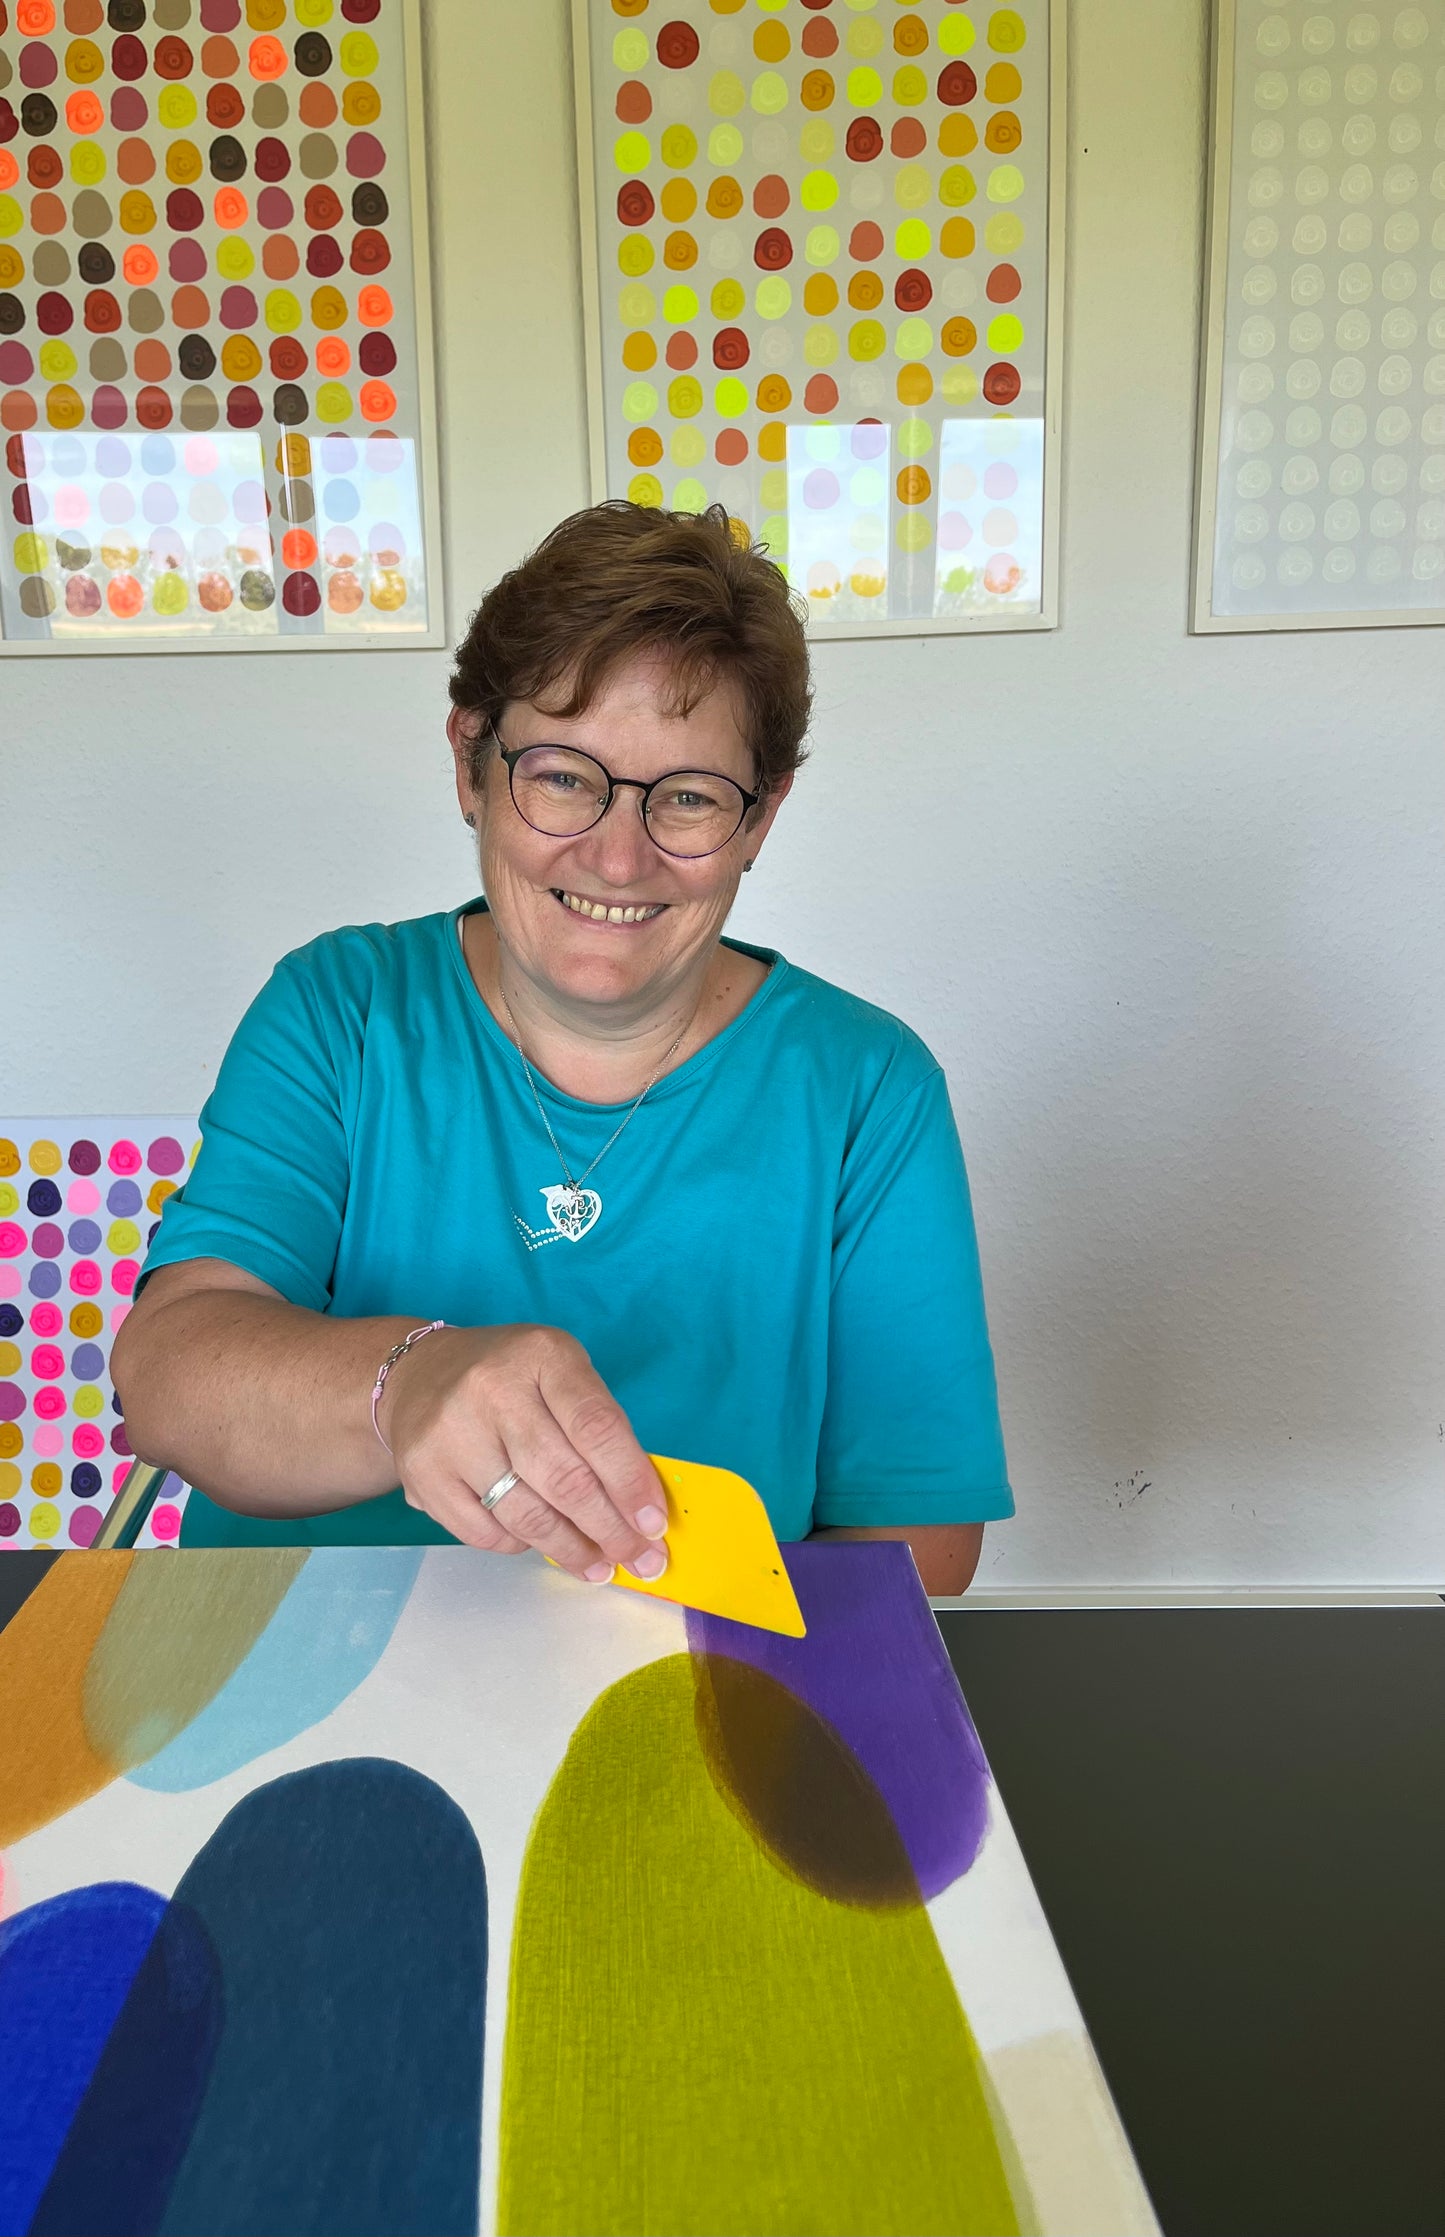 Painting Workshop "Life is short, make it nice!" with Janine in Bietigheim-Bissingen, Germany